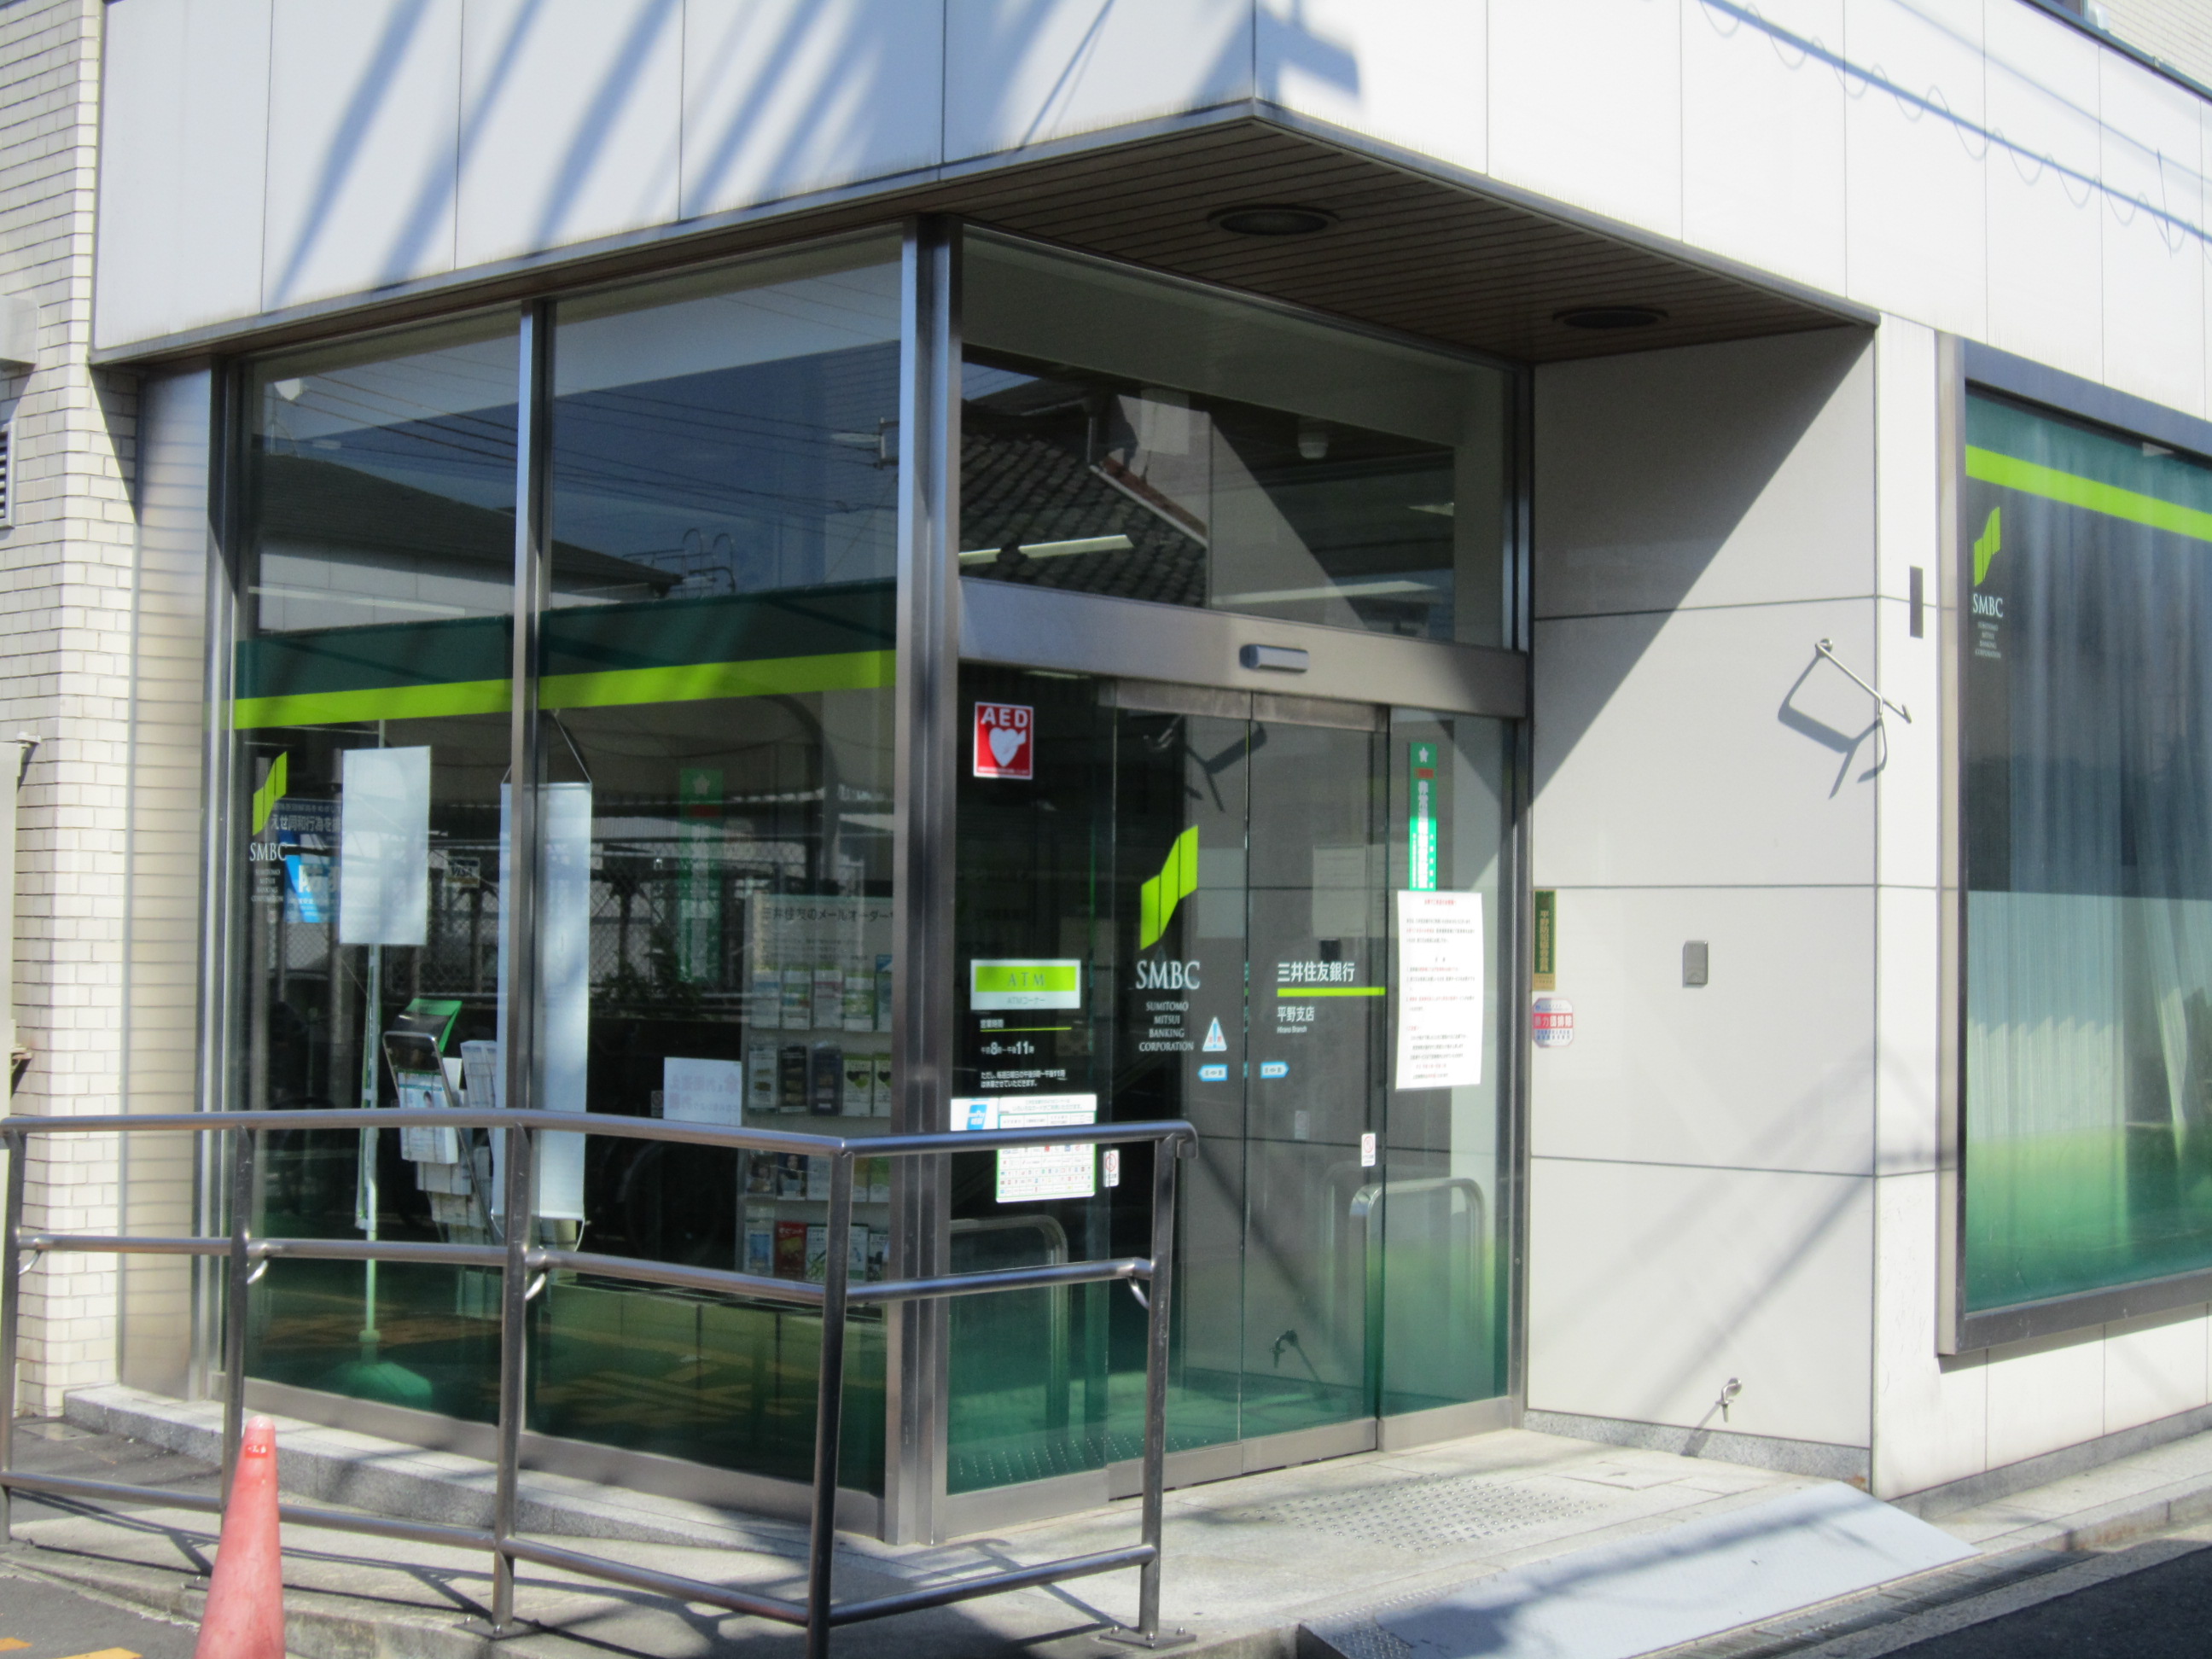 Bank. 536m to Sumitomo Mitsui Banking Corporation plain Branch (Bank)